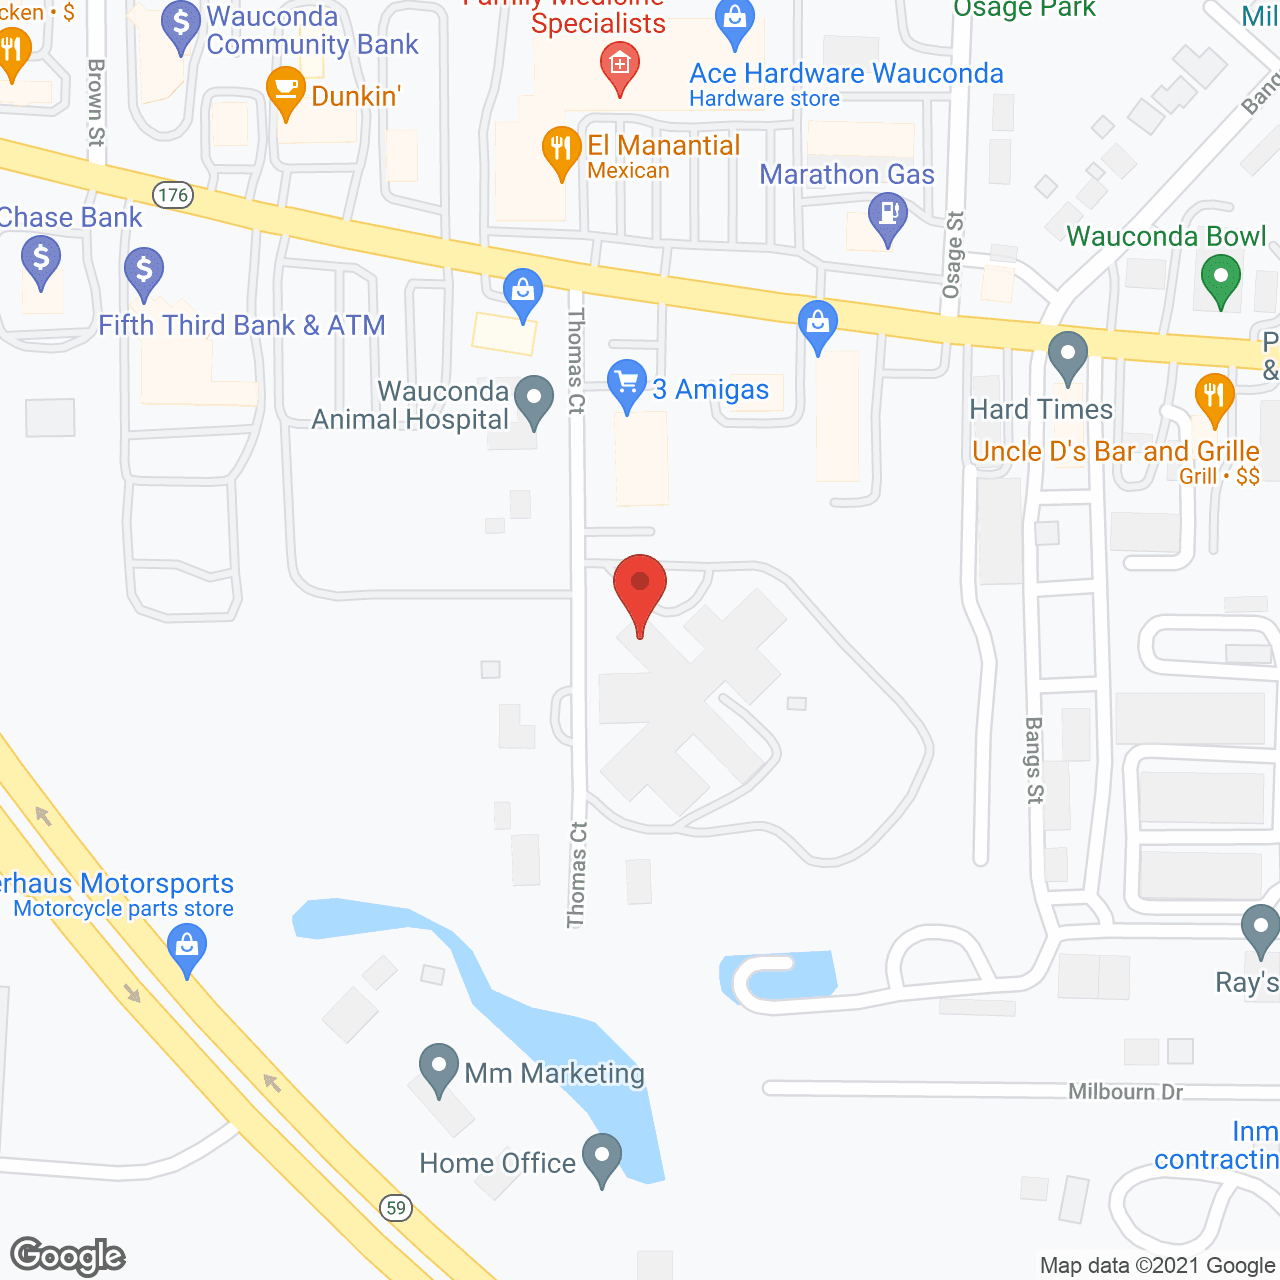 Wauconda Healthcare and Rehabilitation Centre, LLC in google map